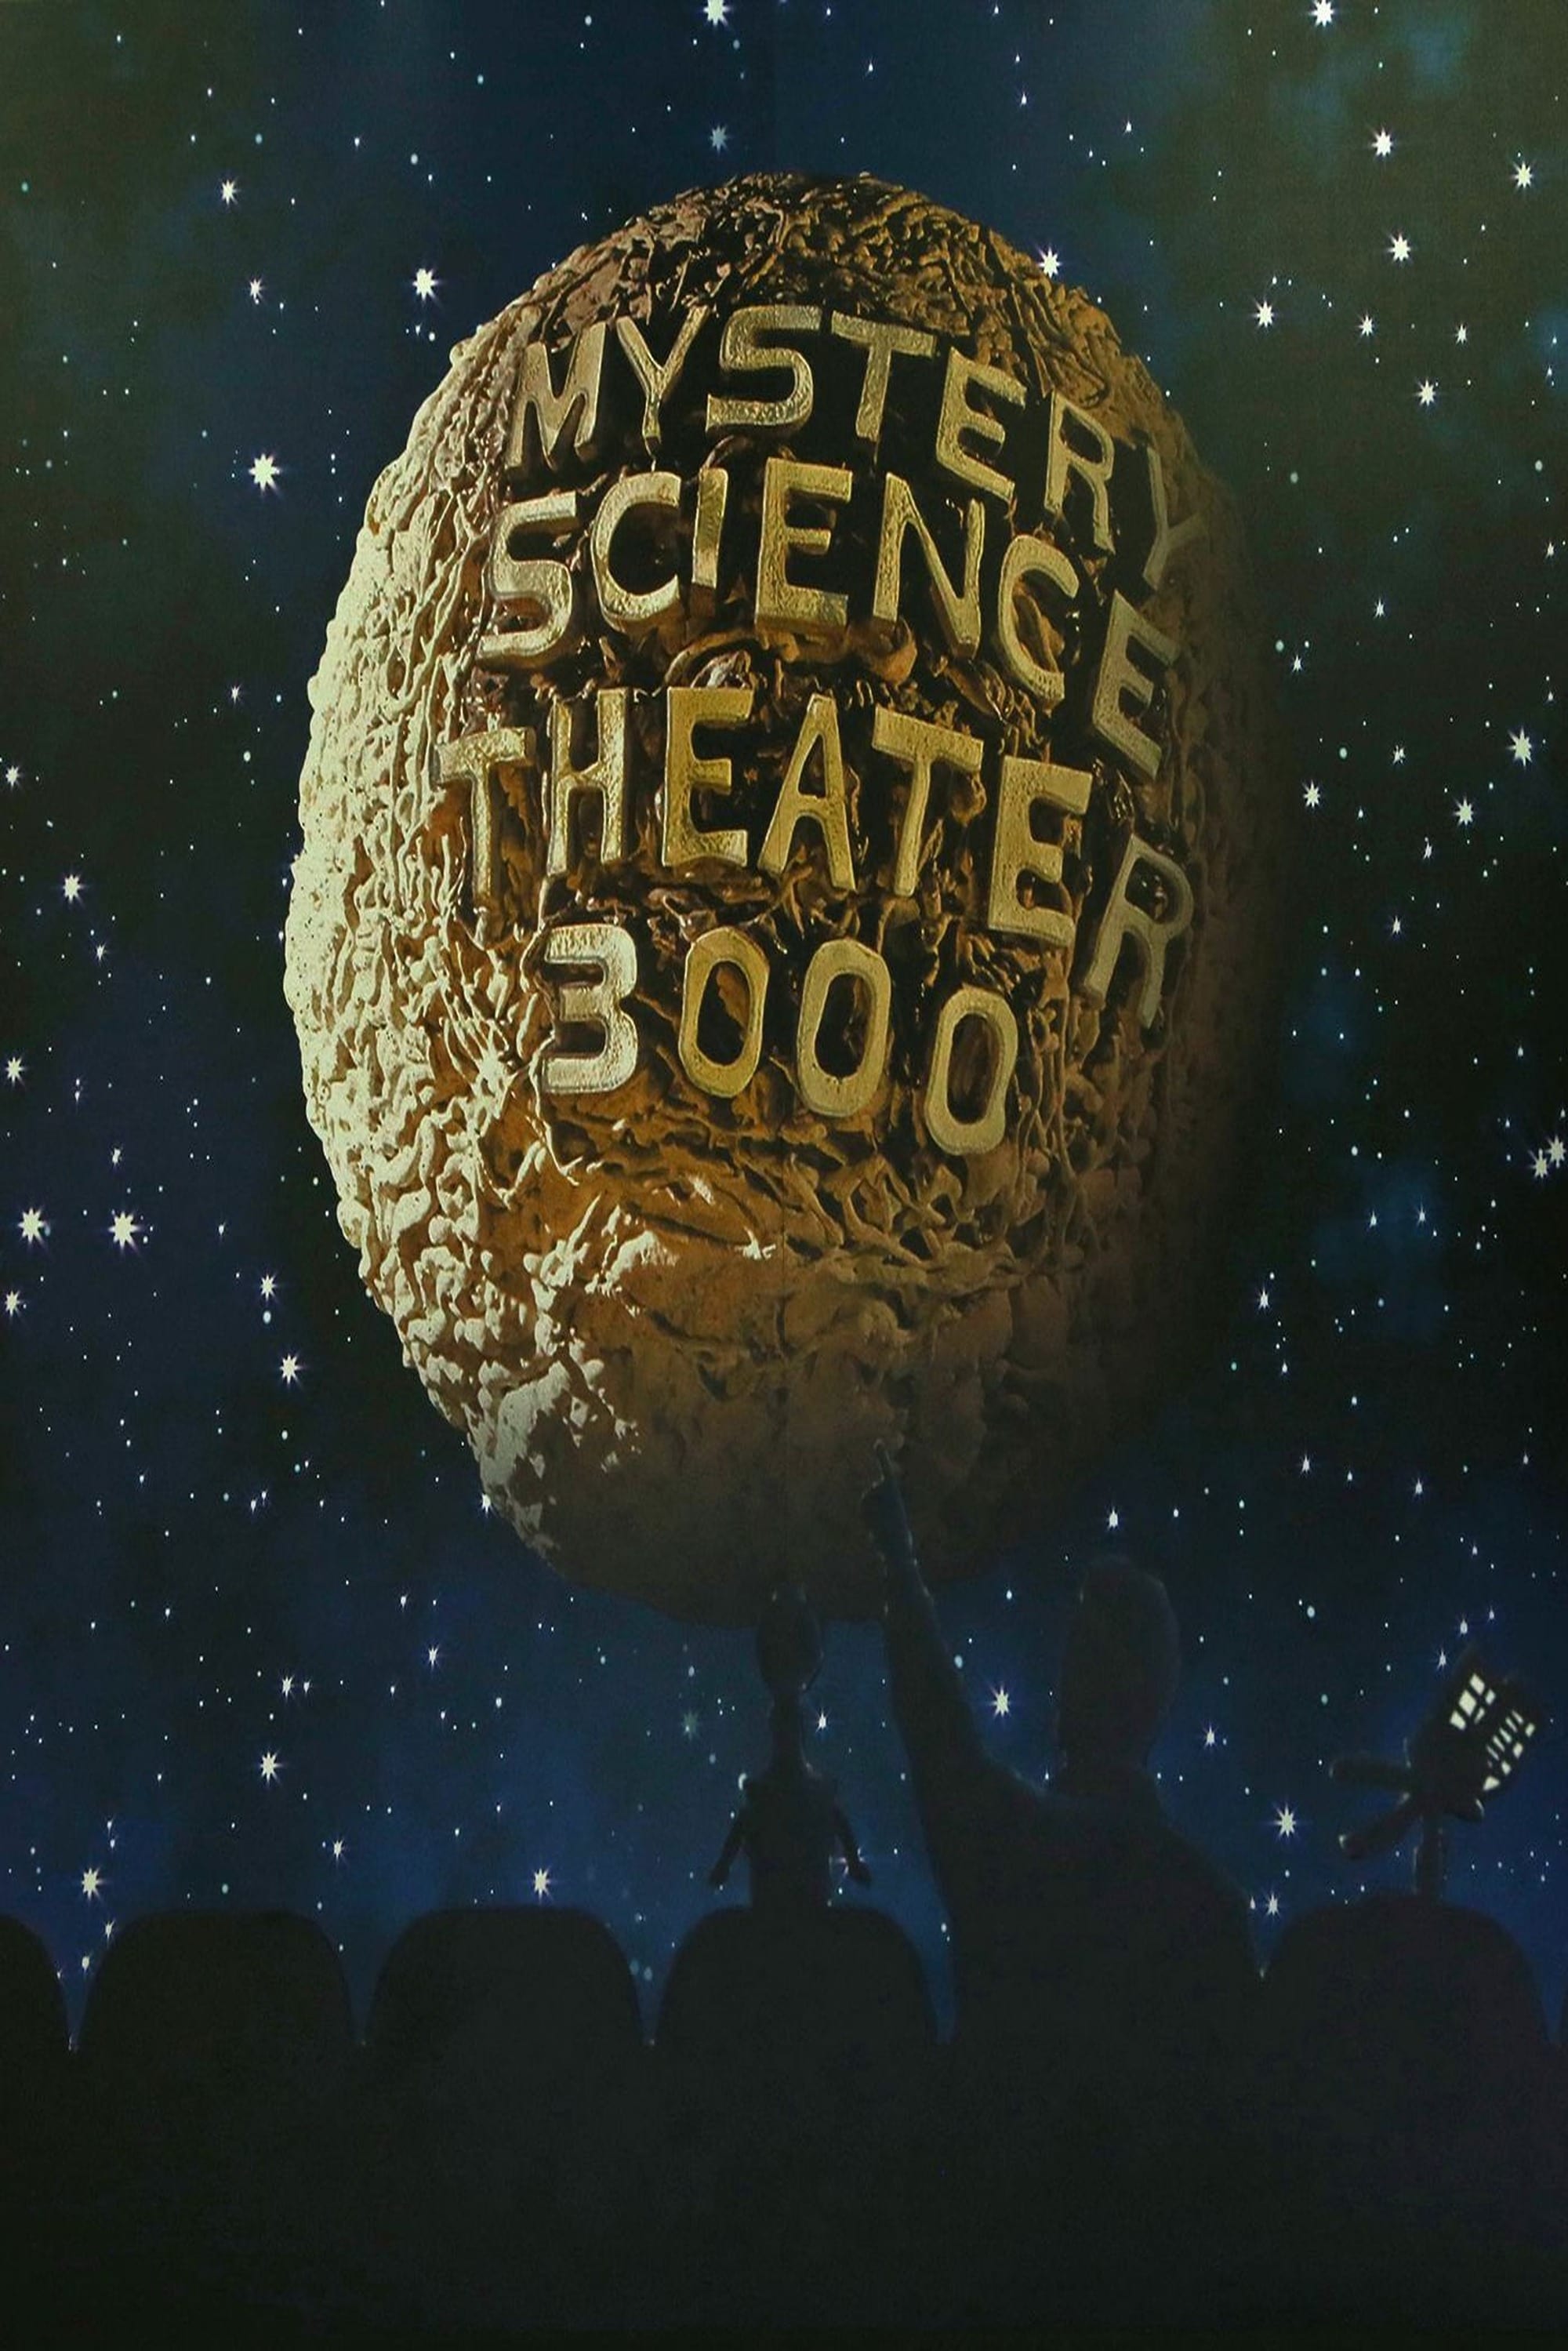 Mystery Science Theater 3000: Gamera vs. Zigra